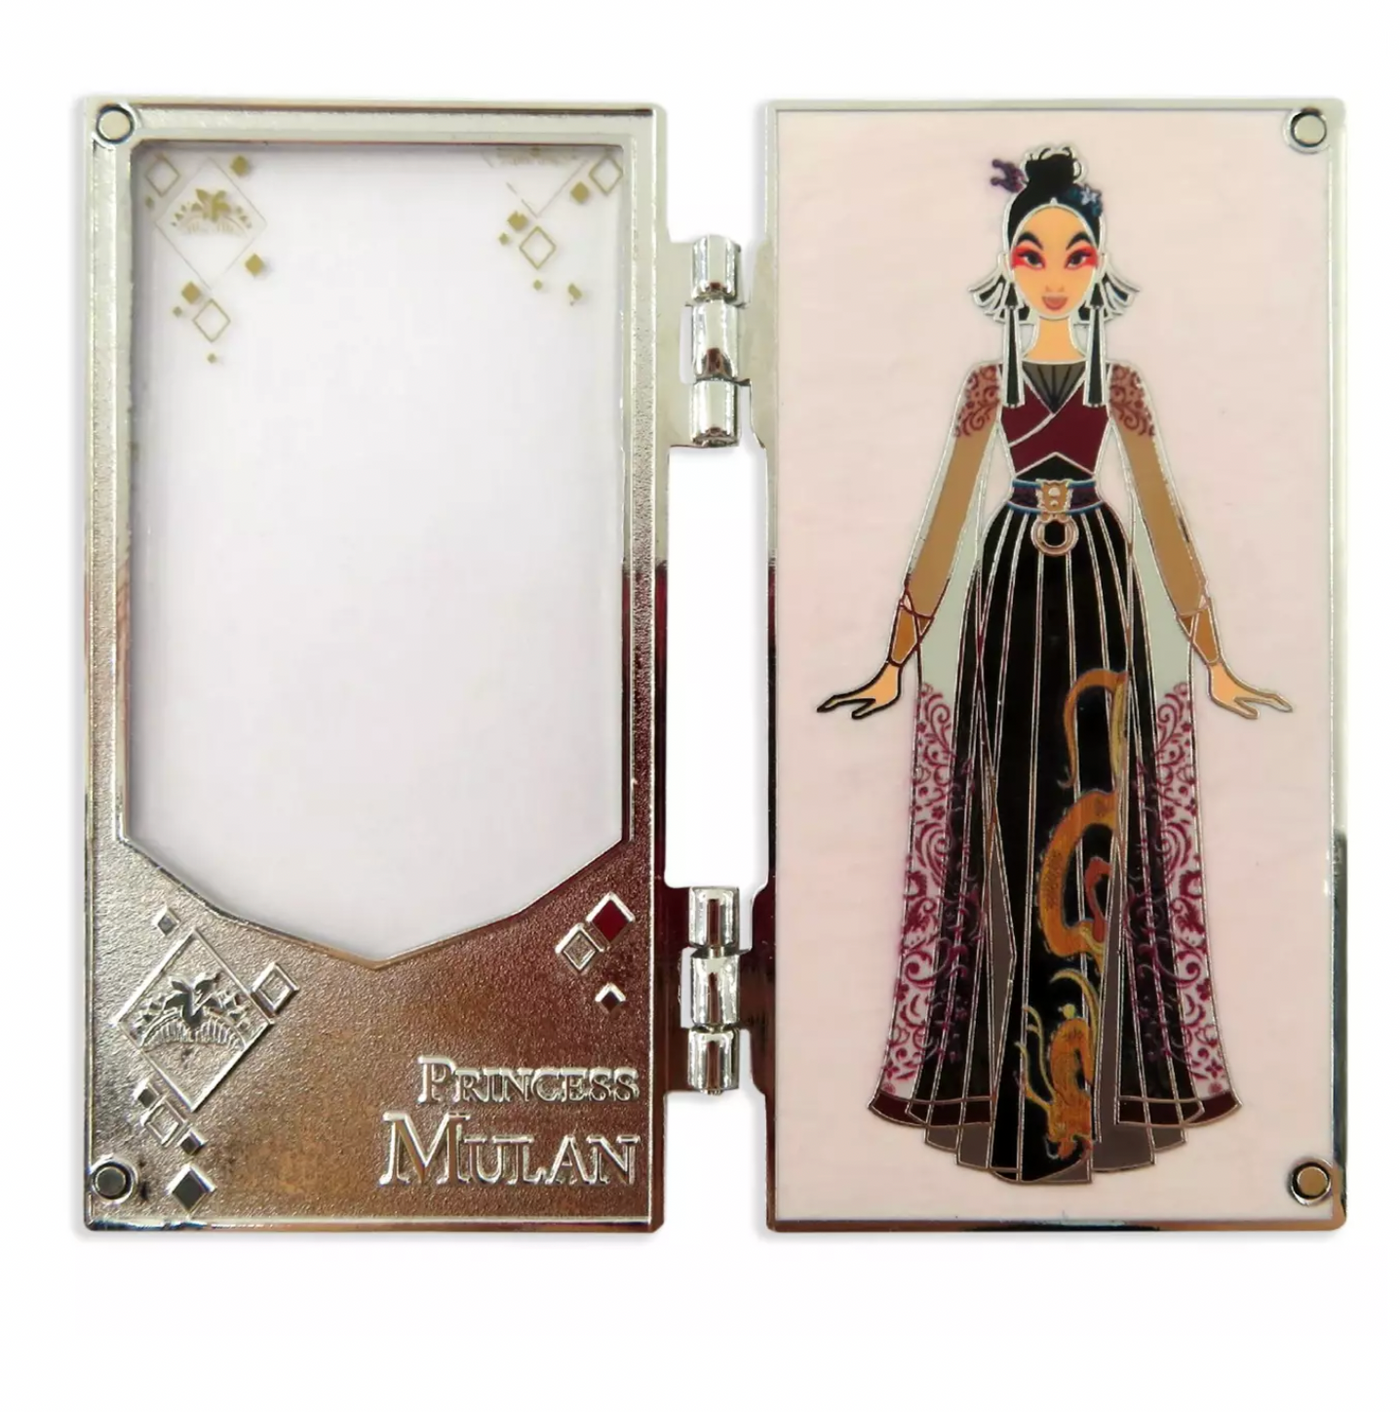 Disney Designer Ultimate Princess Collection Mulan Hinged Pin Limited New Card